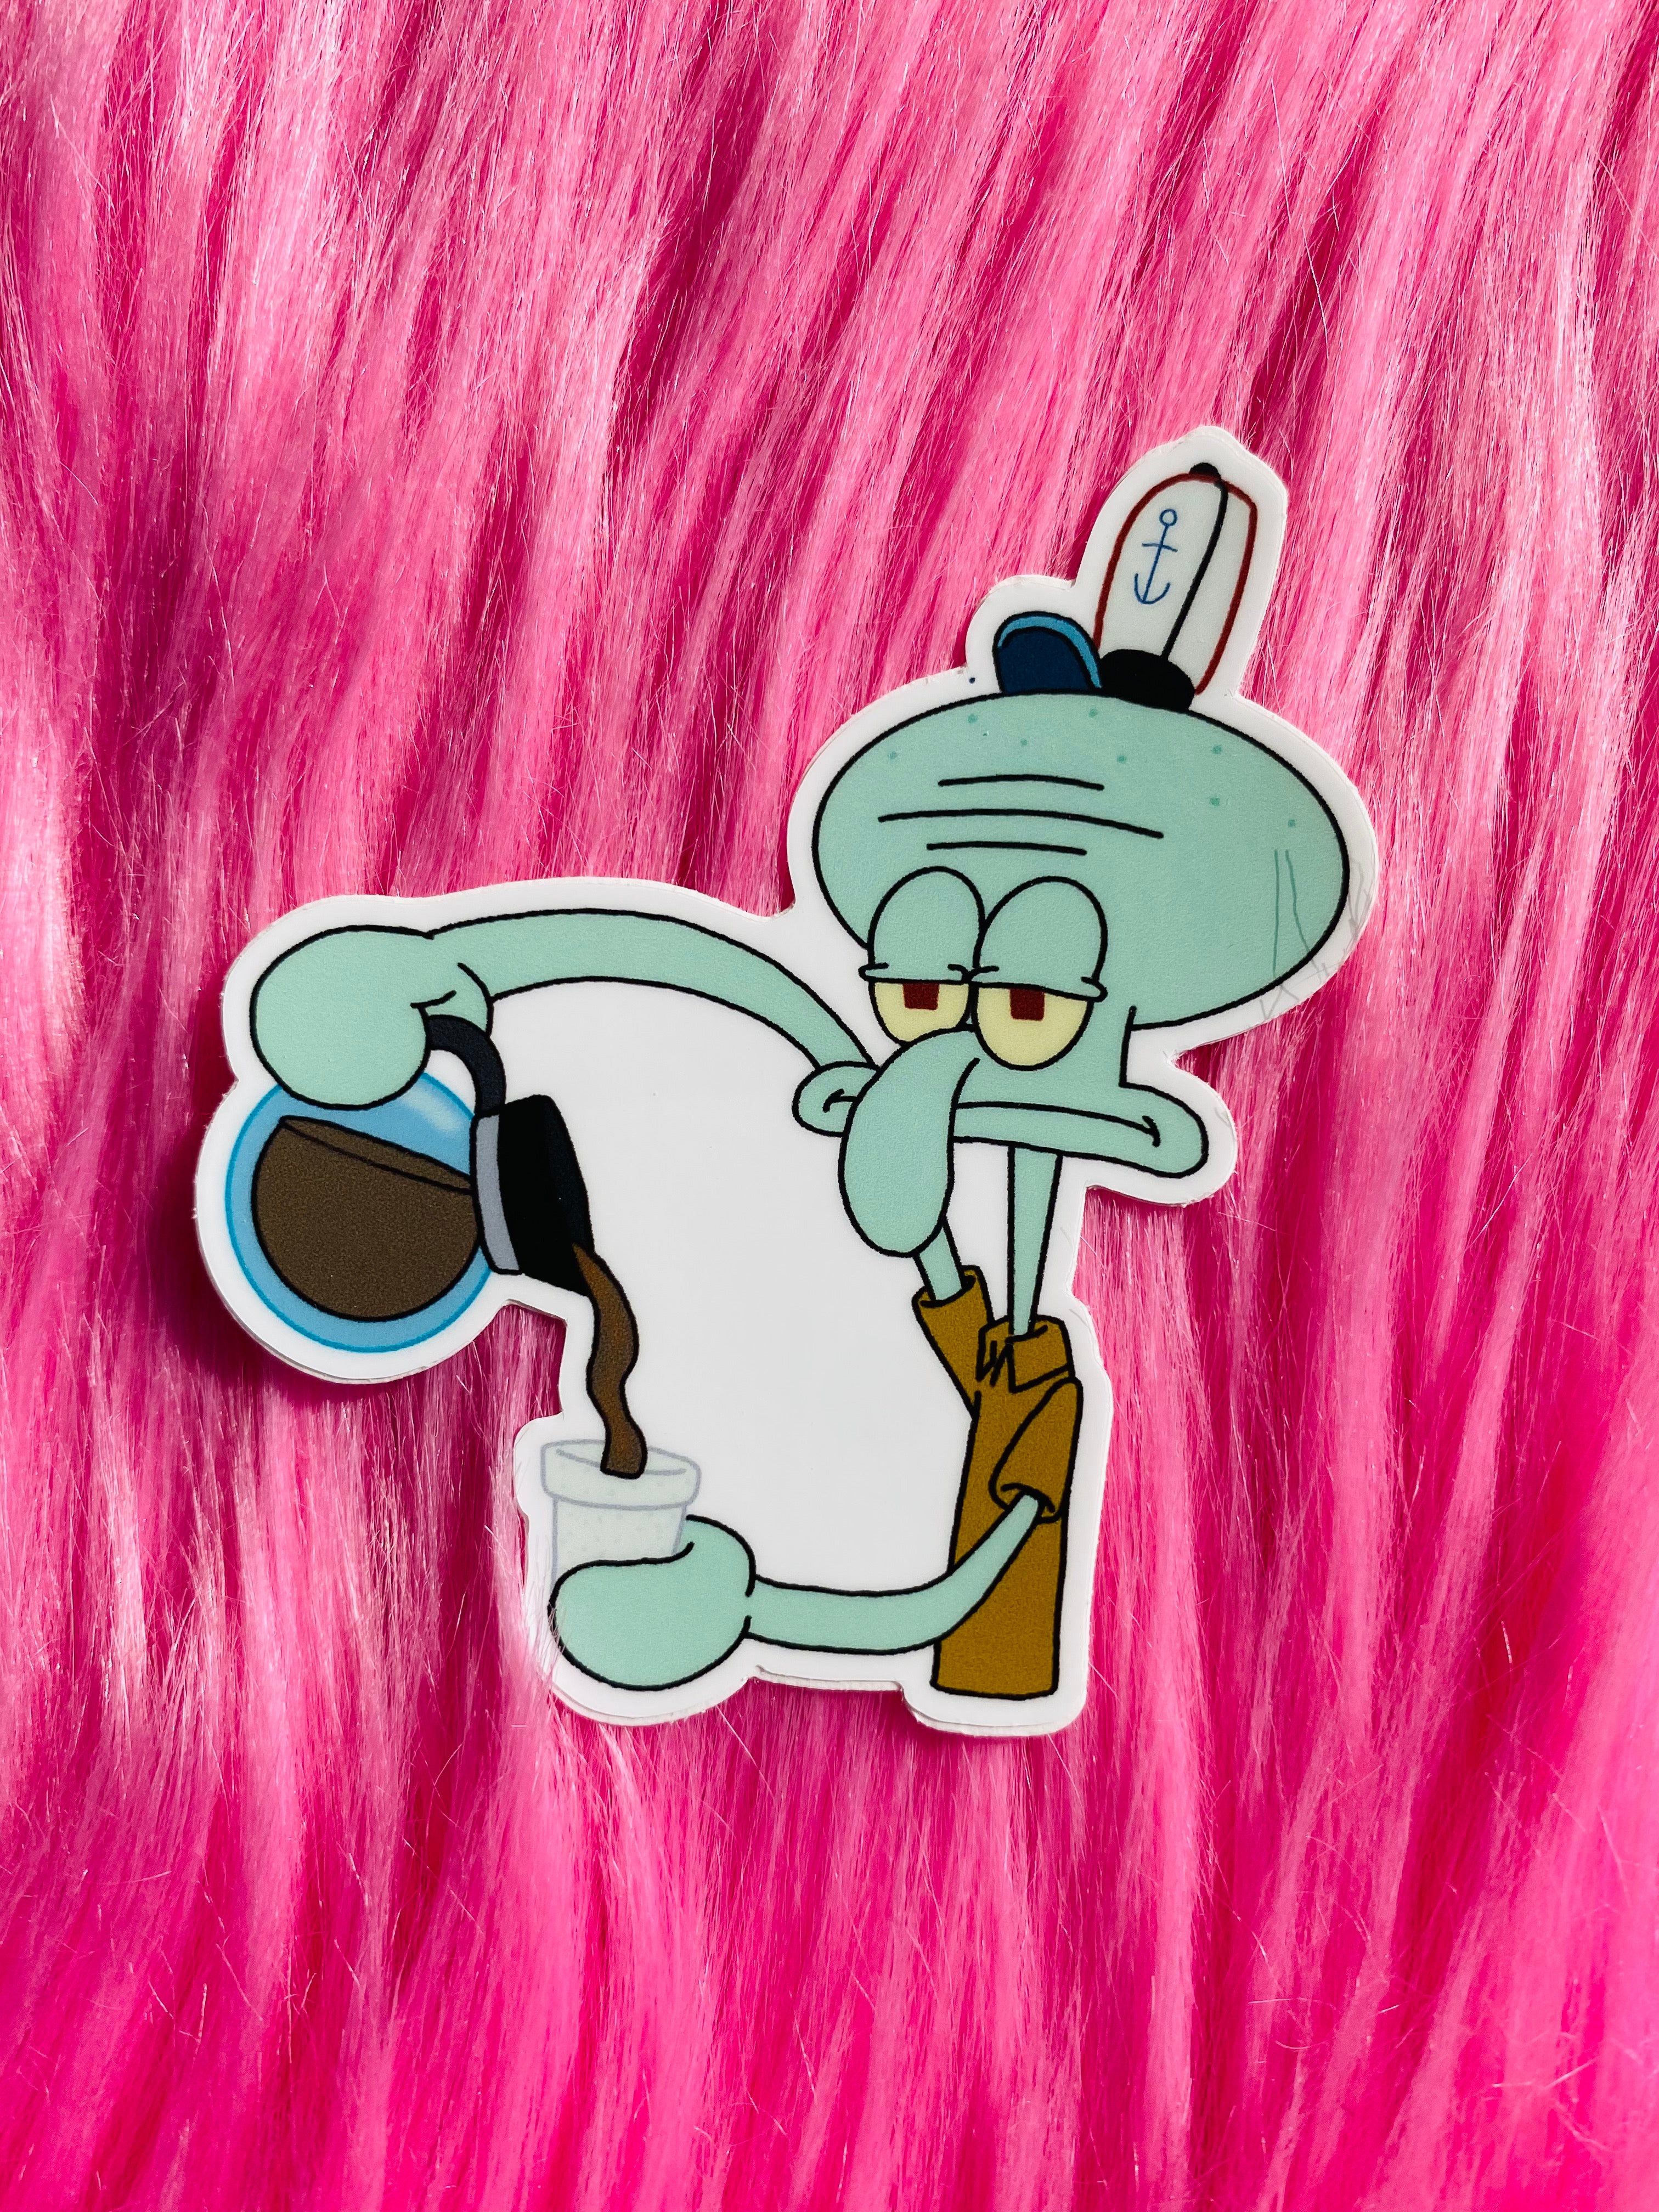 Spongebob squarepants coffee mug sticker - Squidward, sticker